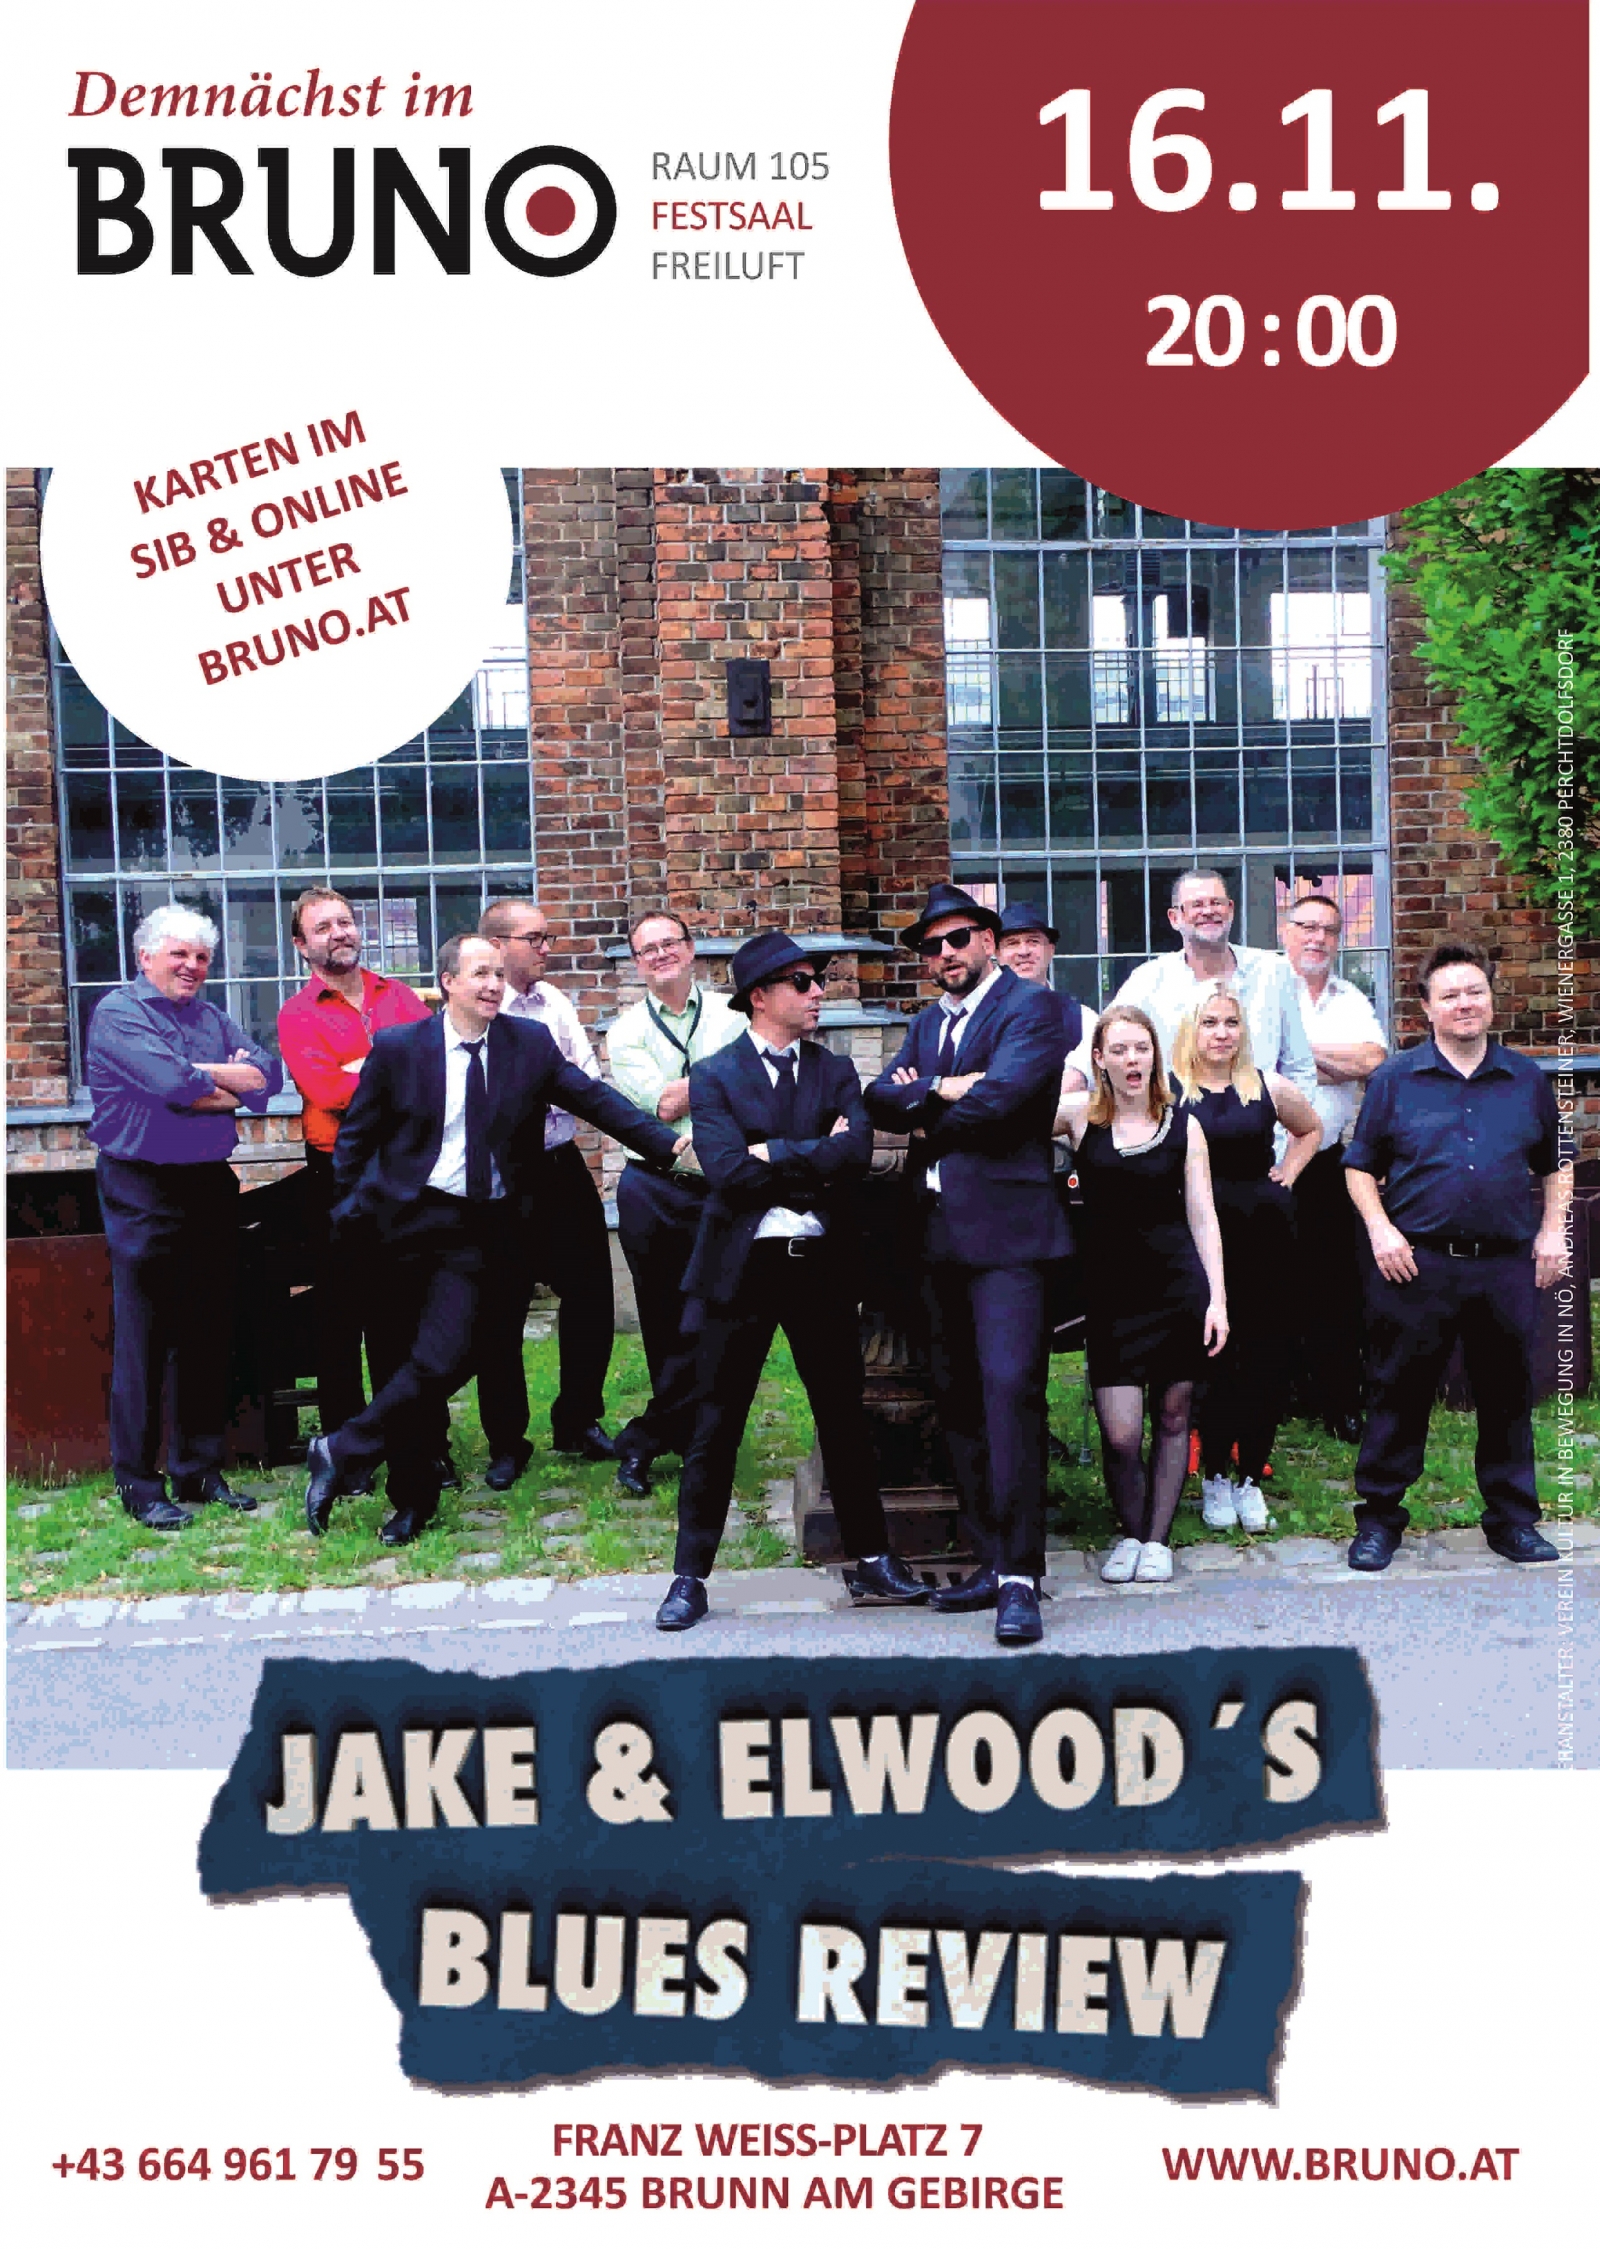 Jake & Elwood's Blues Review